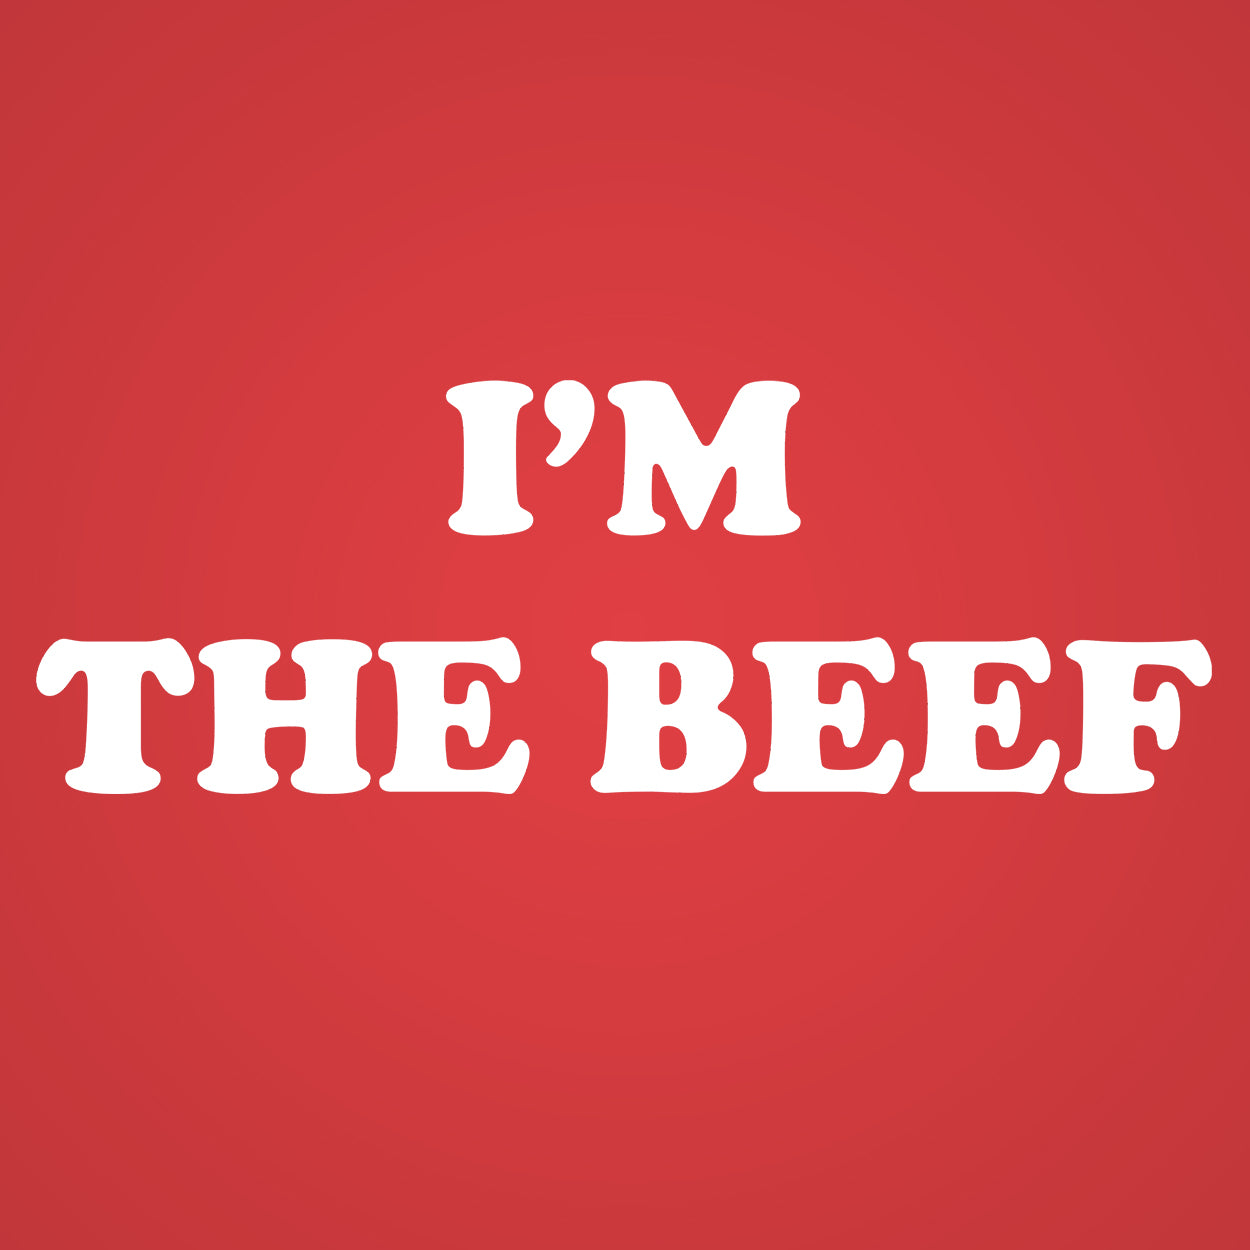 I'm The Beef Tshirt - Donkey Tees